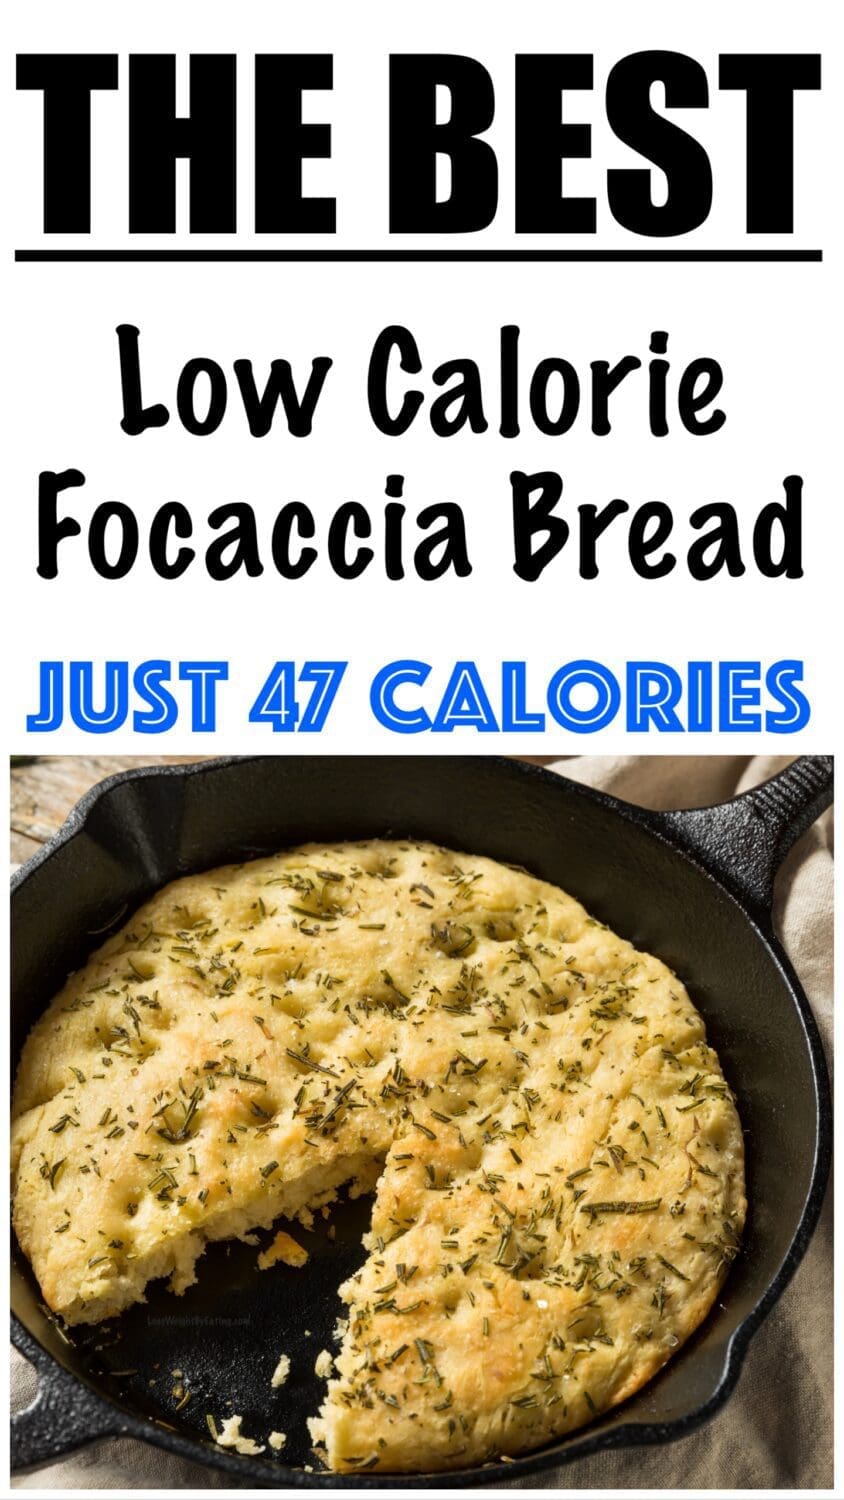 Low Calorie Focaccia Bread Recipe